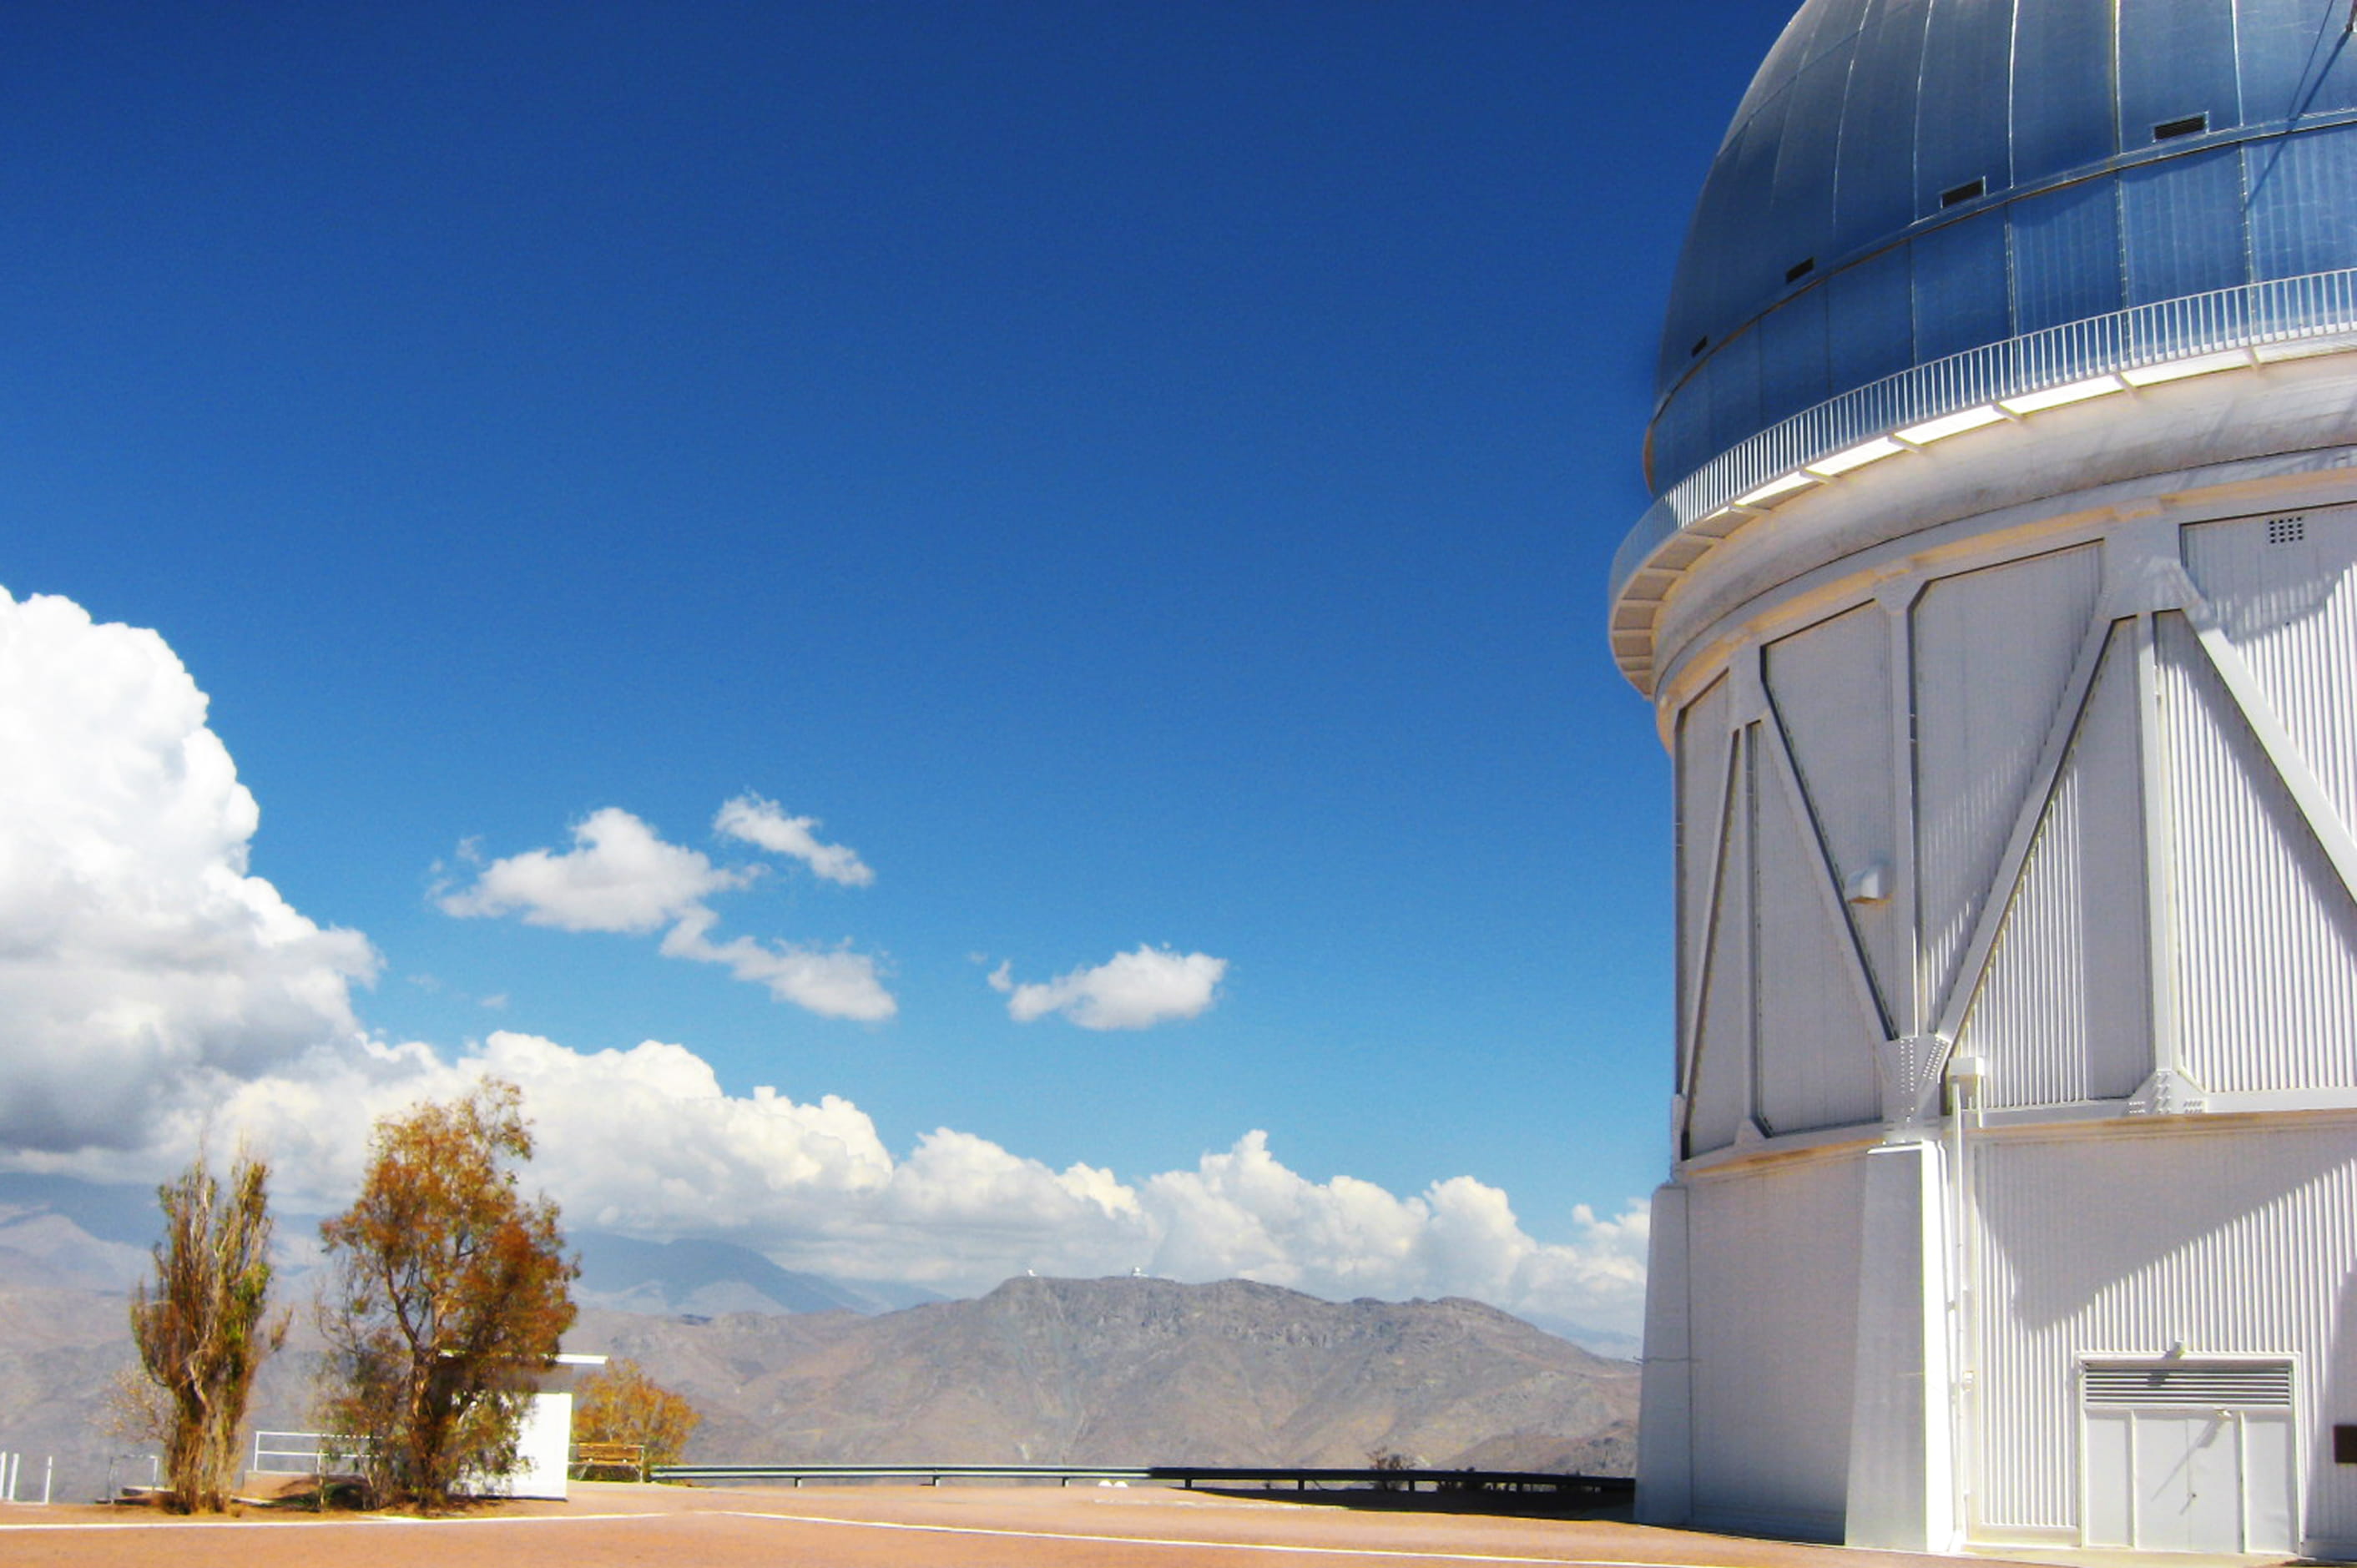 chile, iv región, observatorio astronómico tololo, blue, observatory